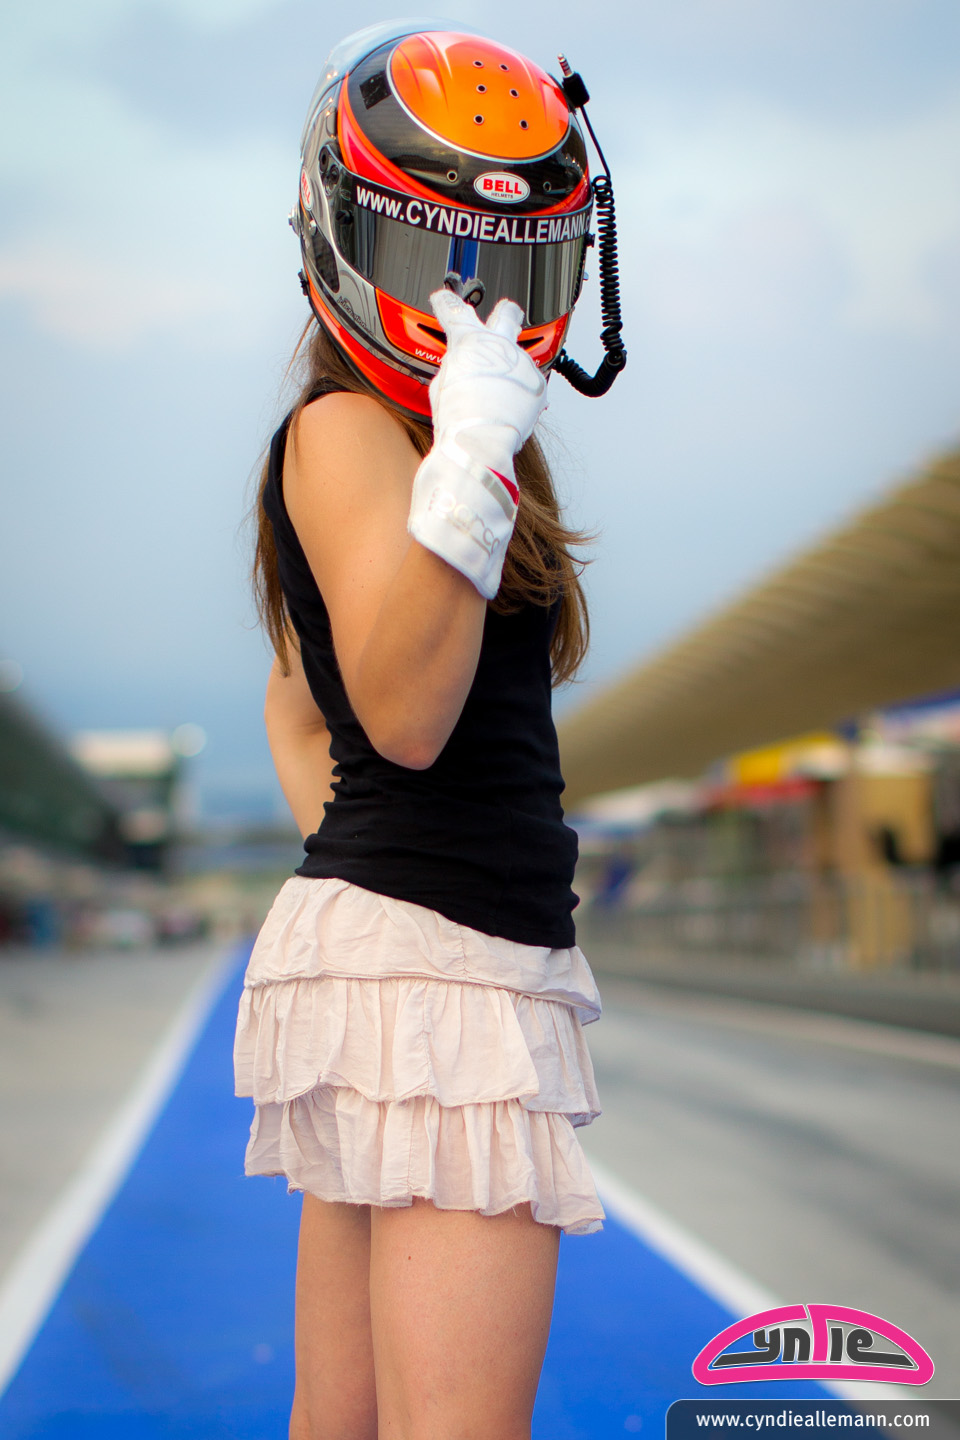 Cyndie Allemann photoshoot at Sepang International Circuit, Malaysia.